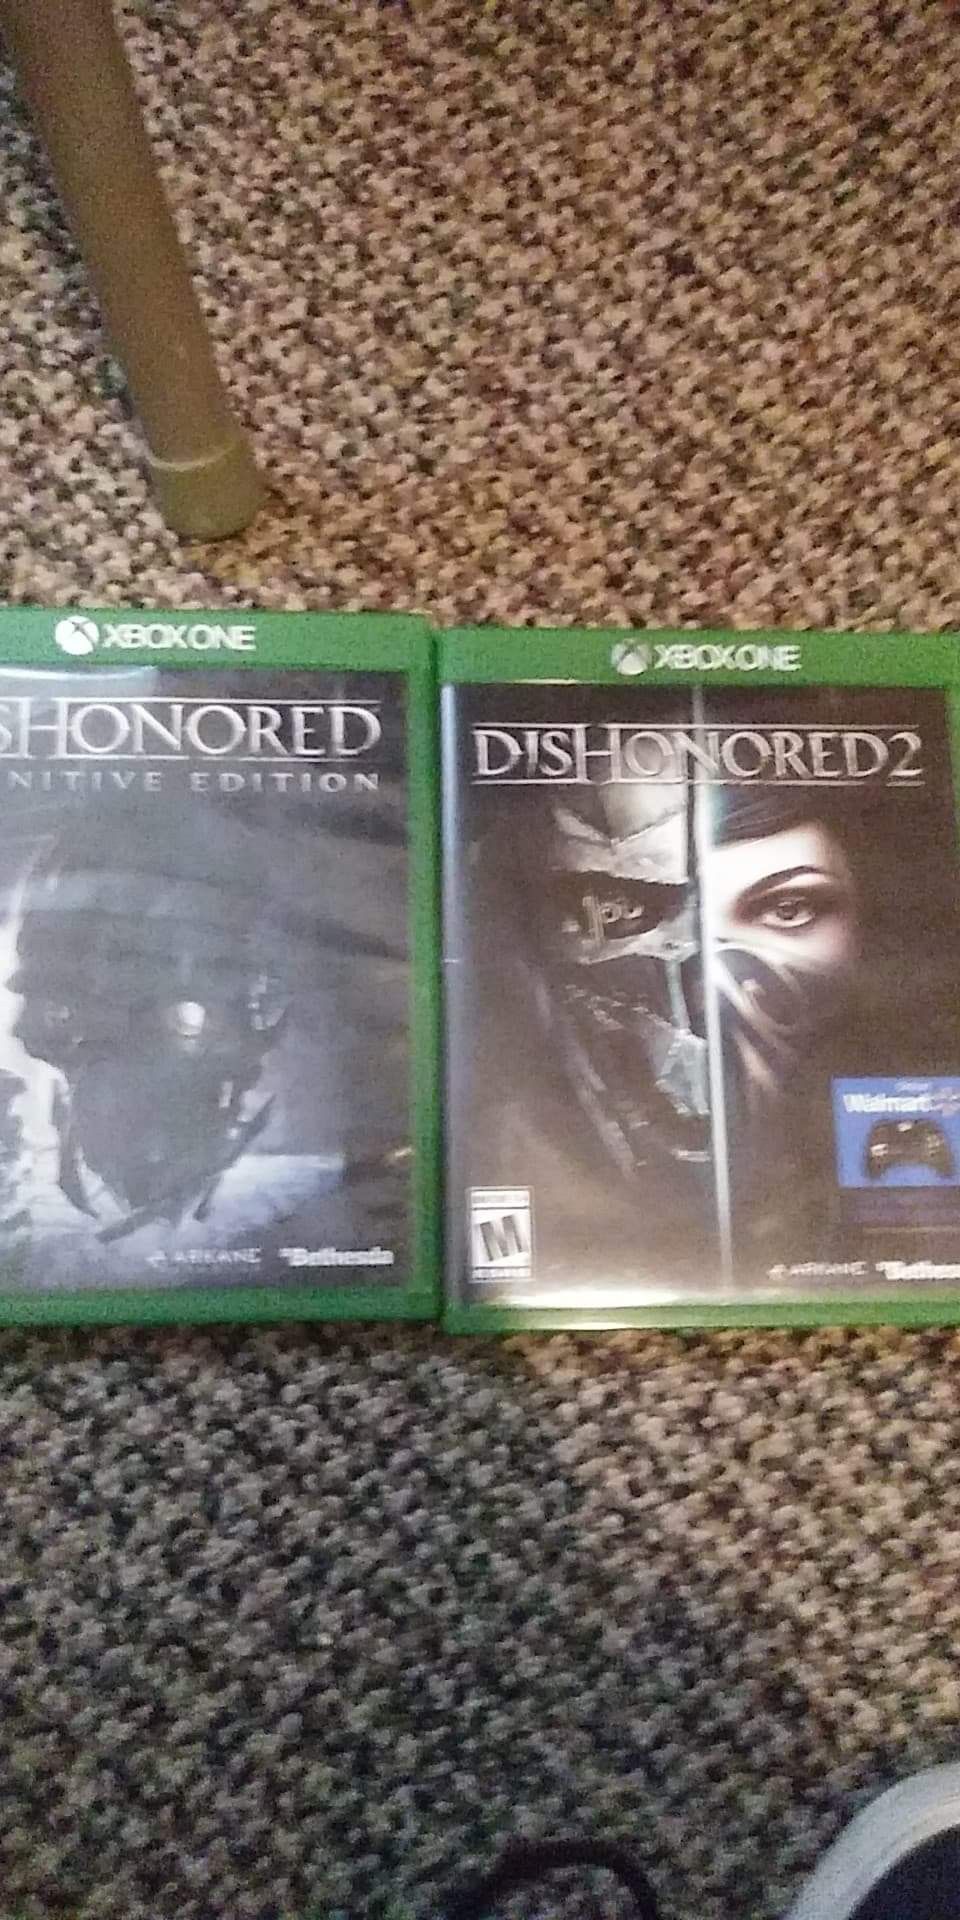 Xbox1 dishonored series